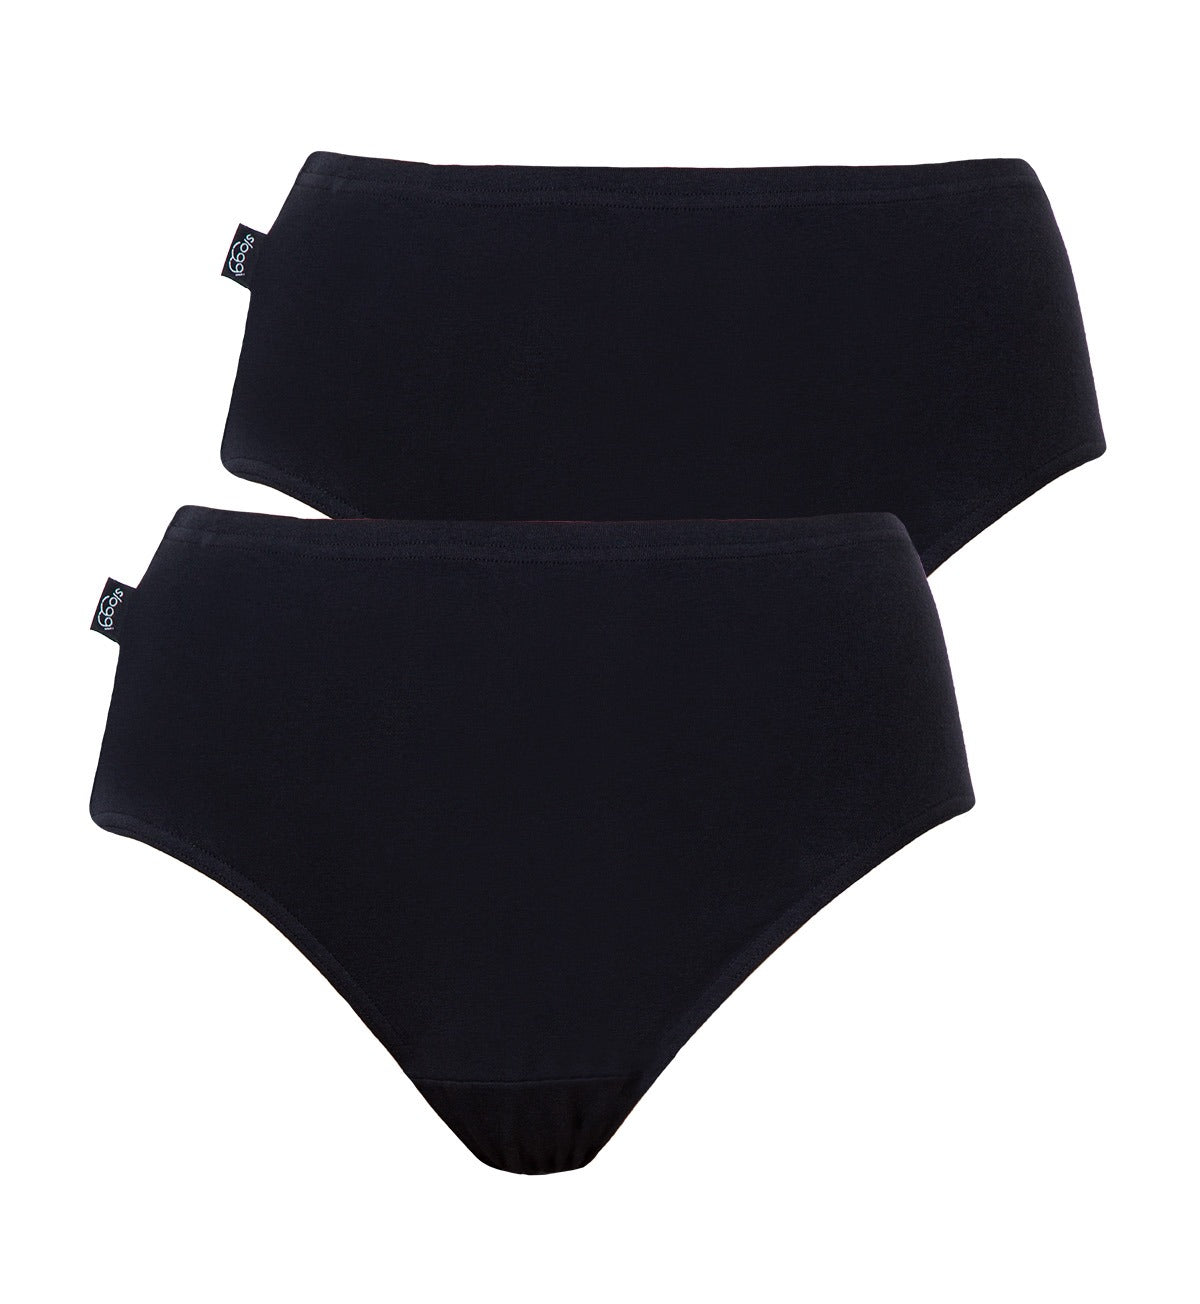 Hikini 2 Pack Midi Briefs In black, Underwear